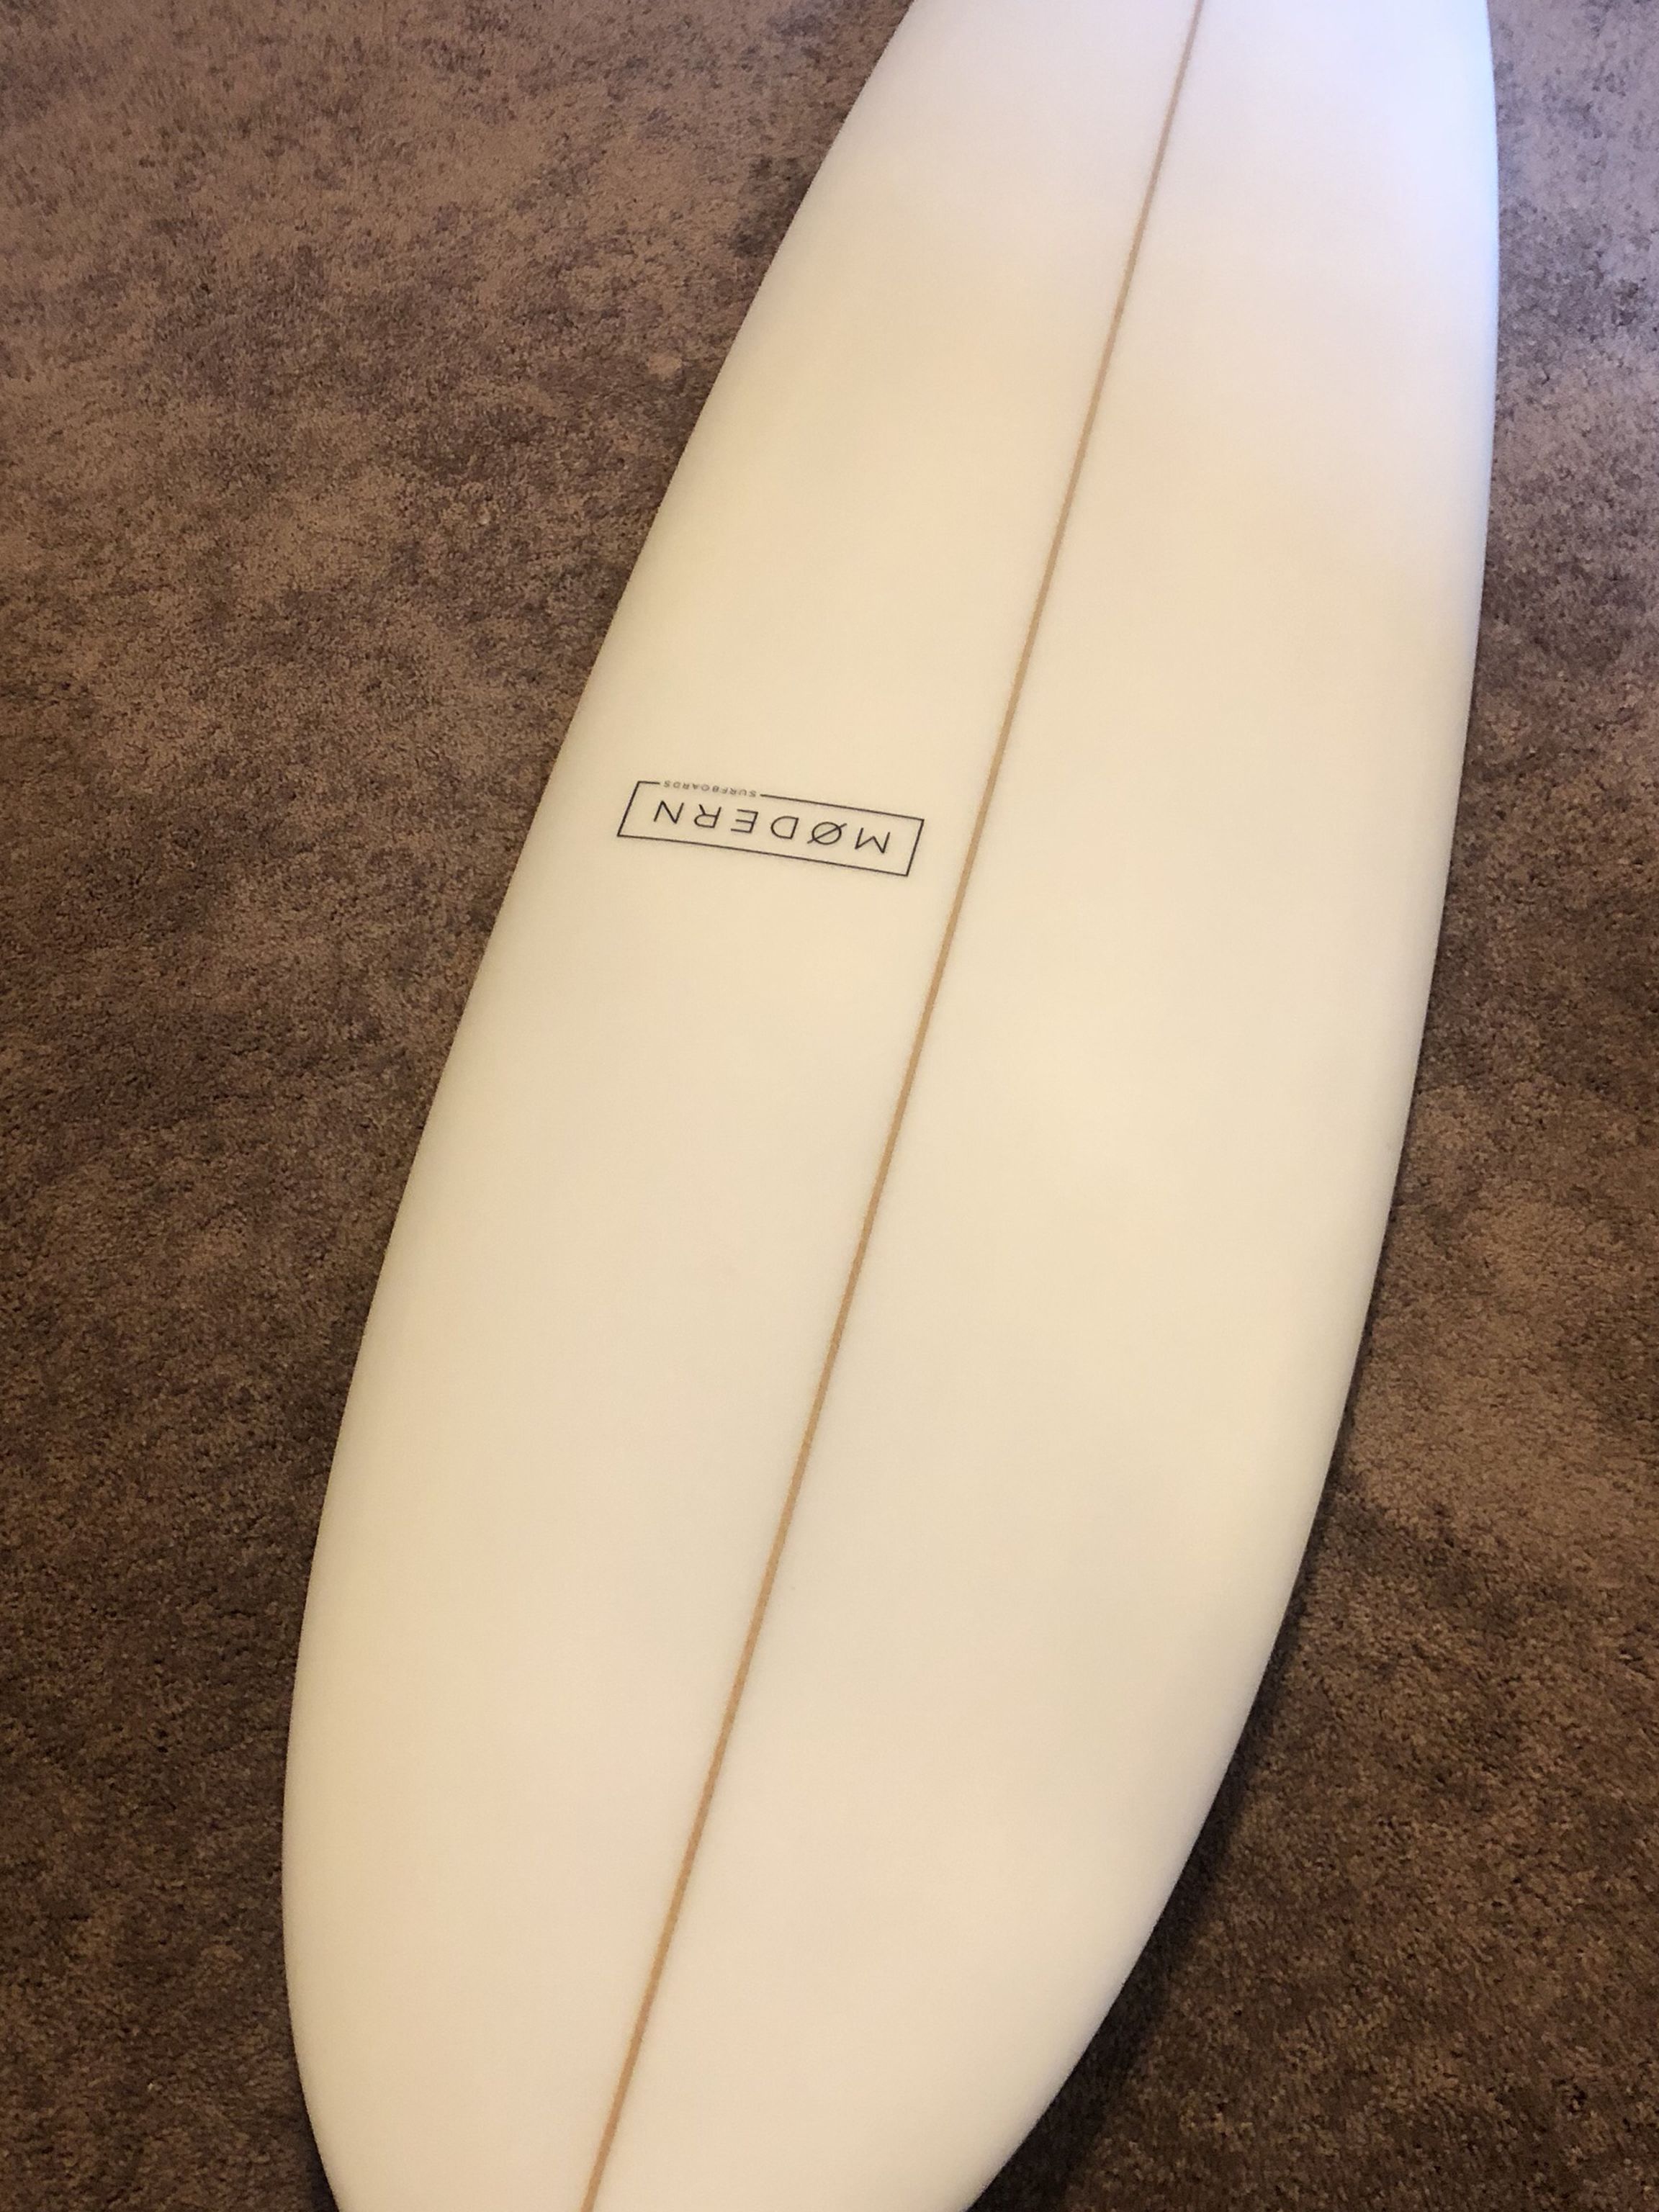 New Surfboard 7’6” Modern falcon